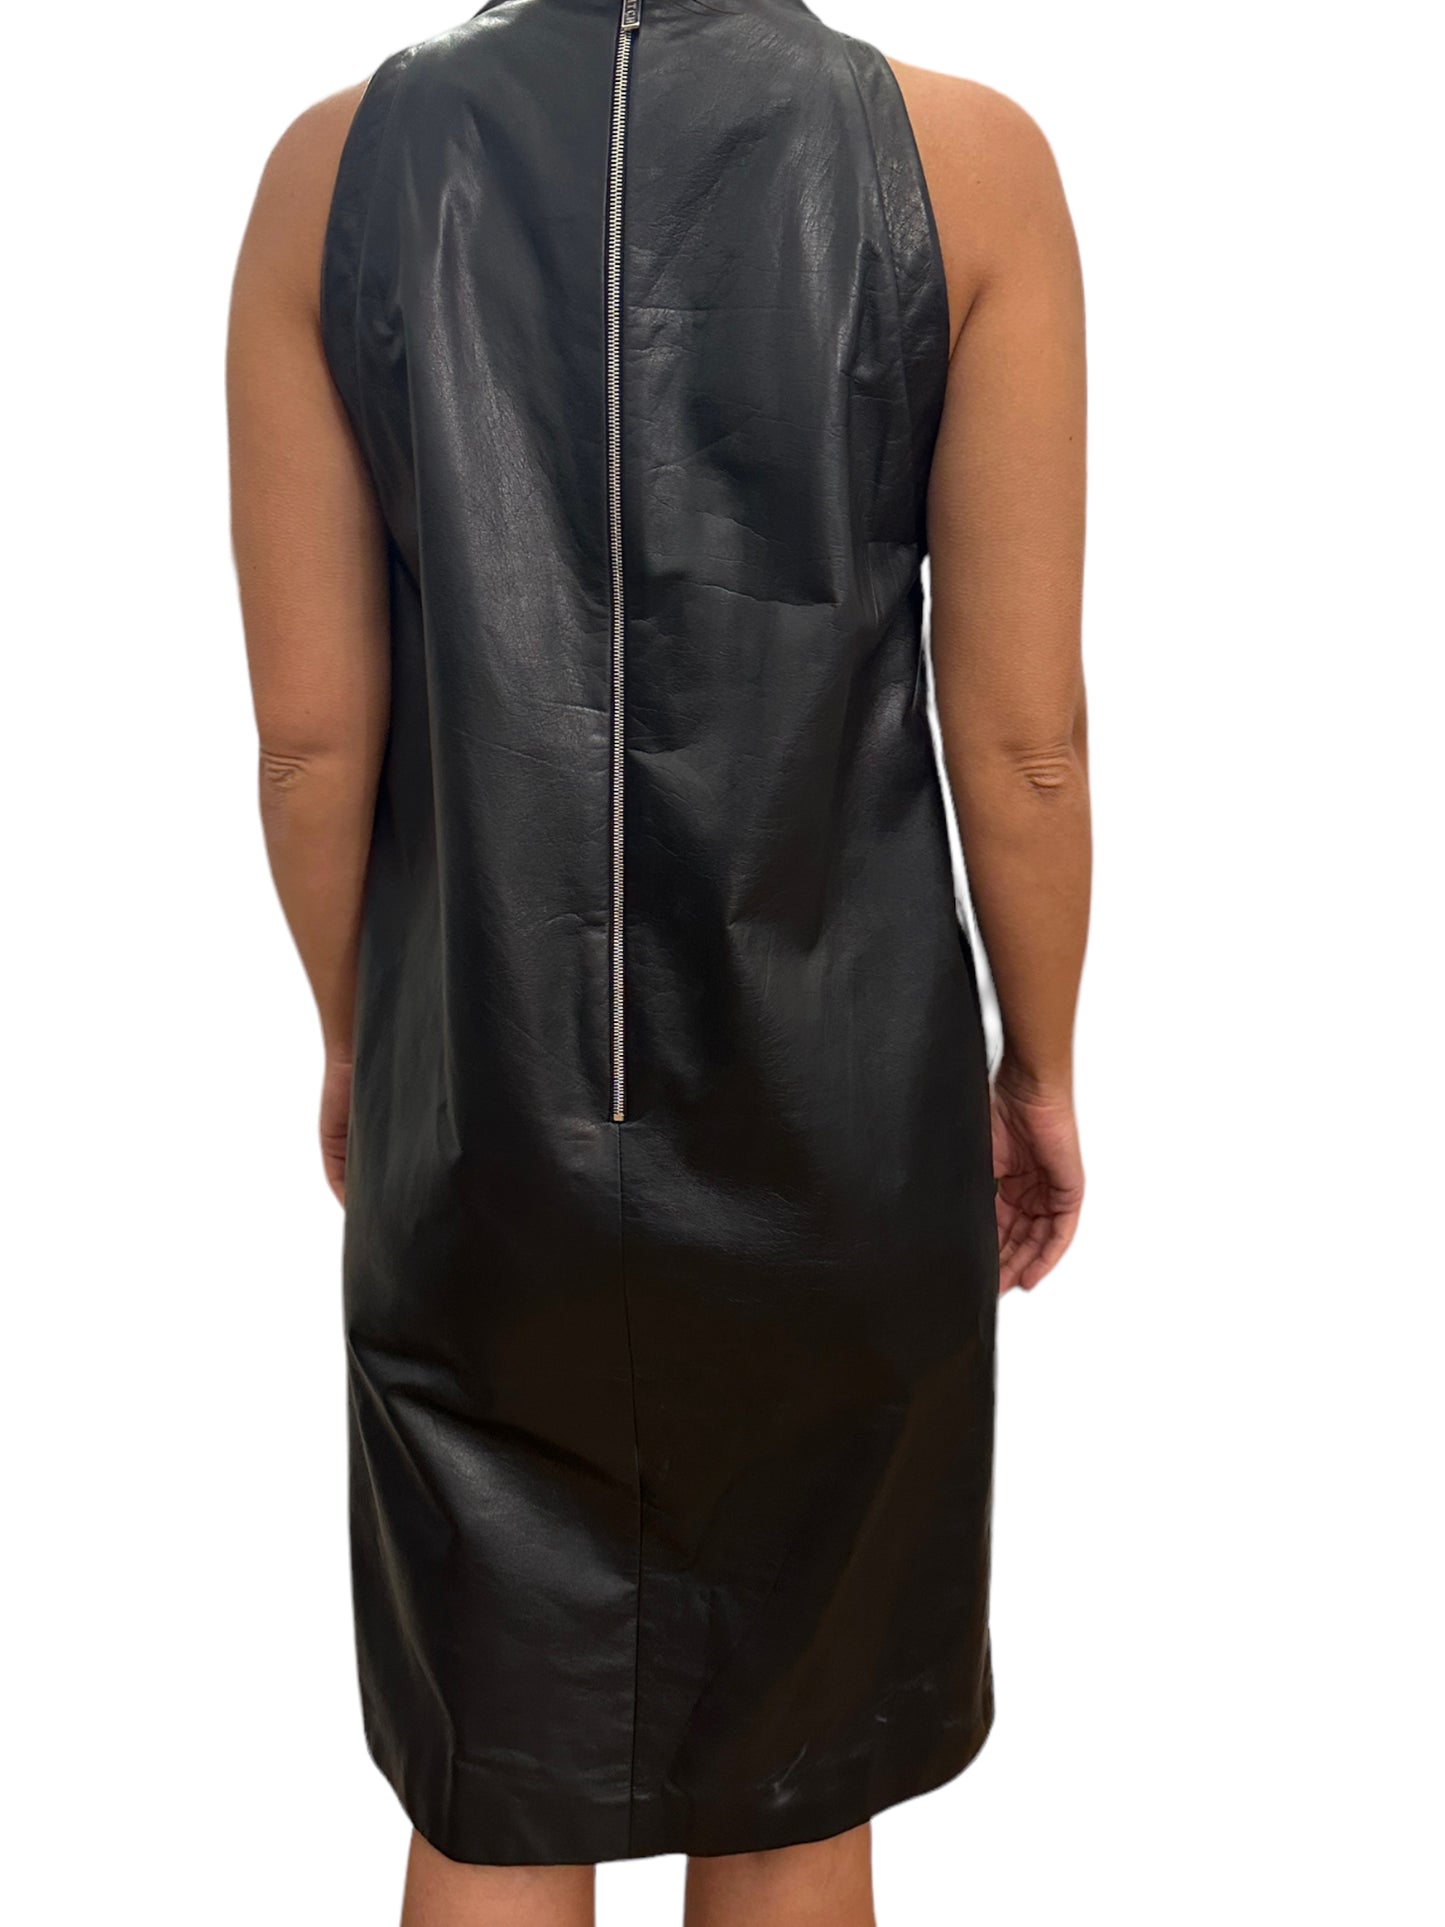 Pritch London - Leather Dress - Size XS/S